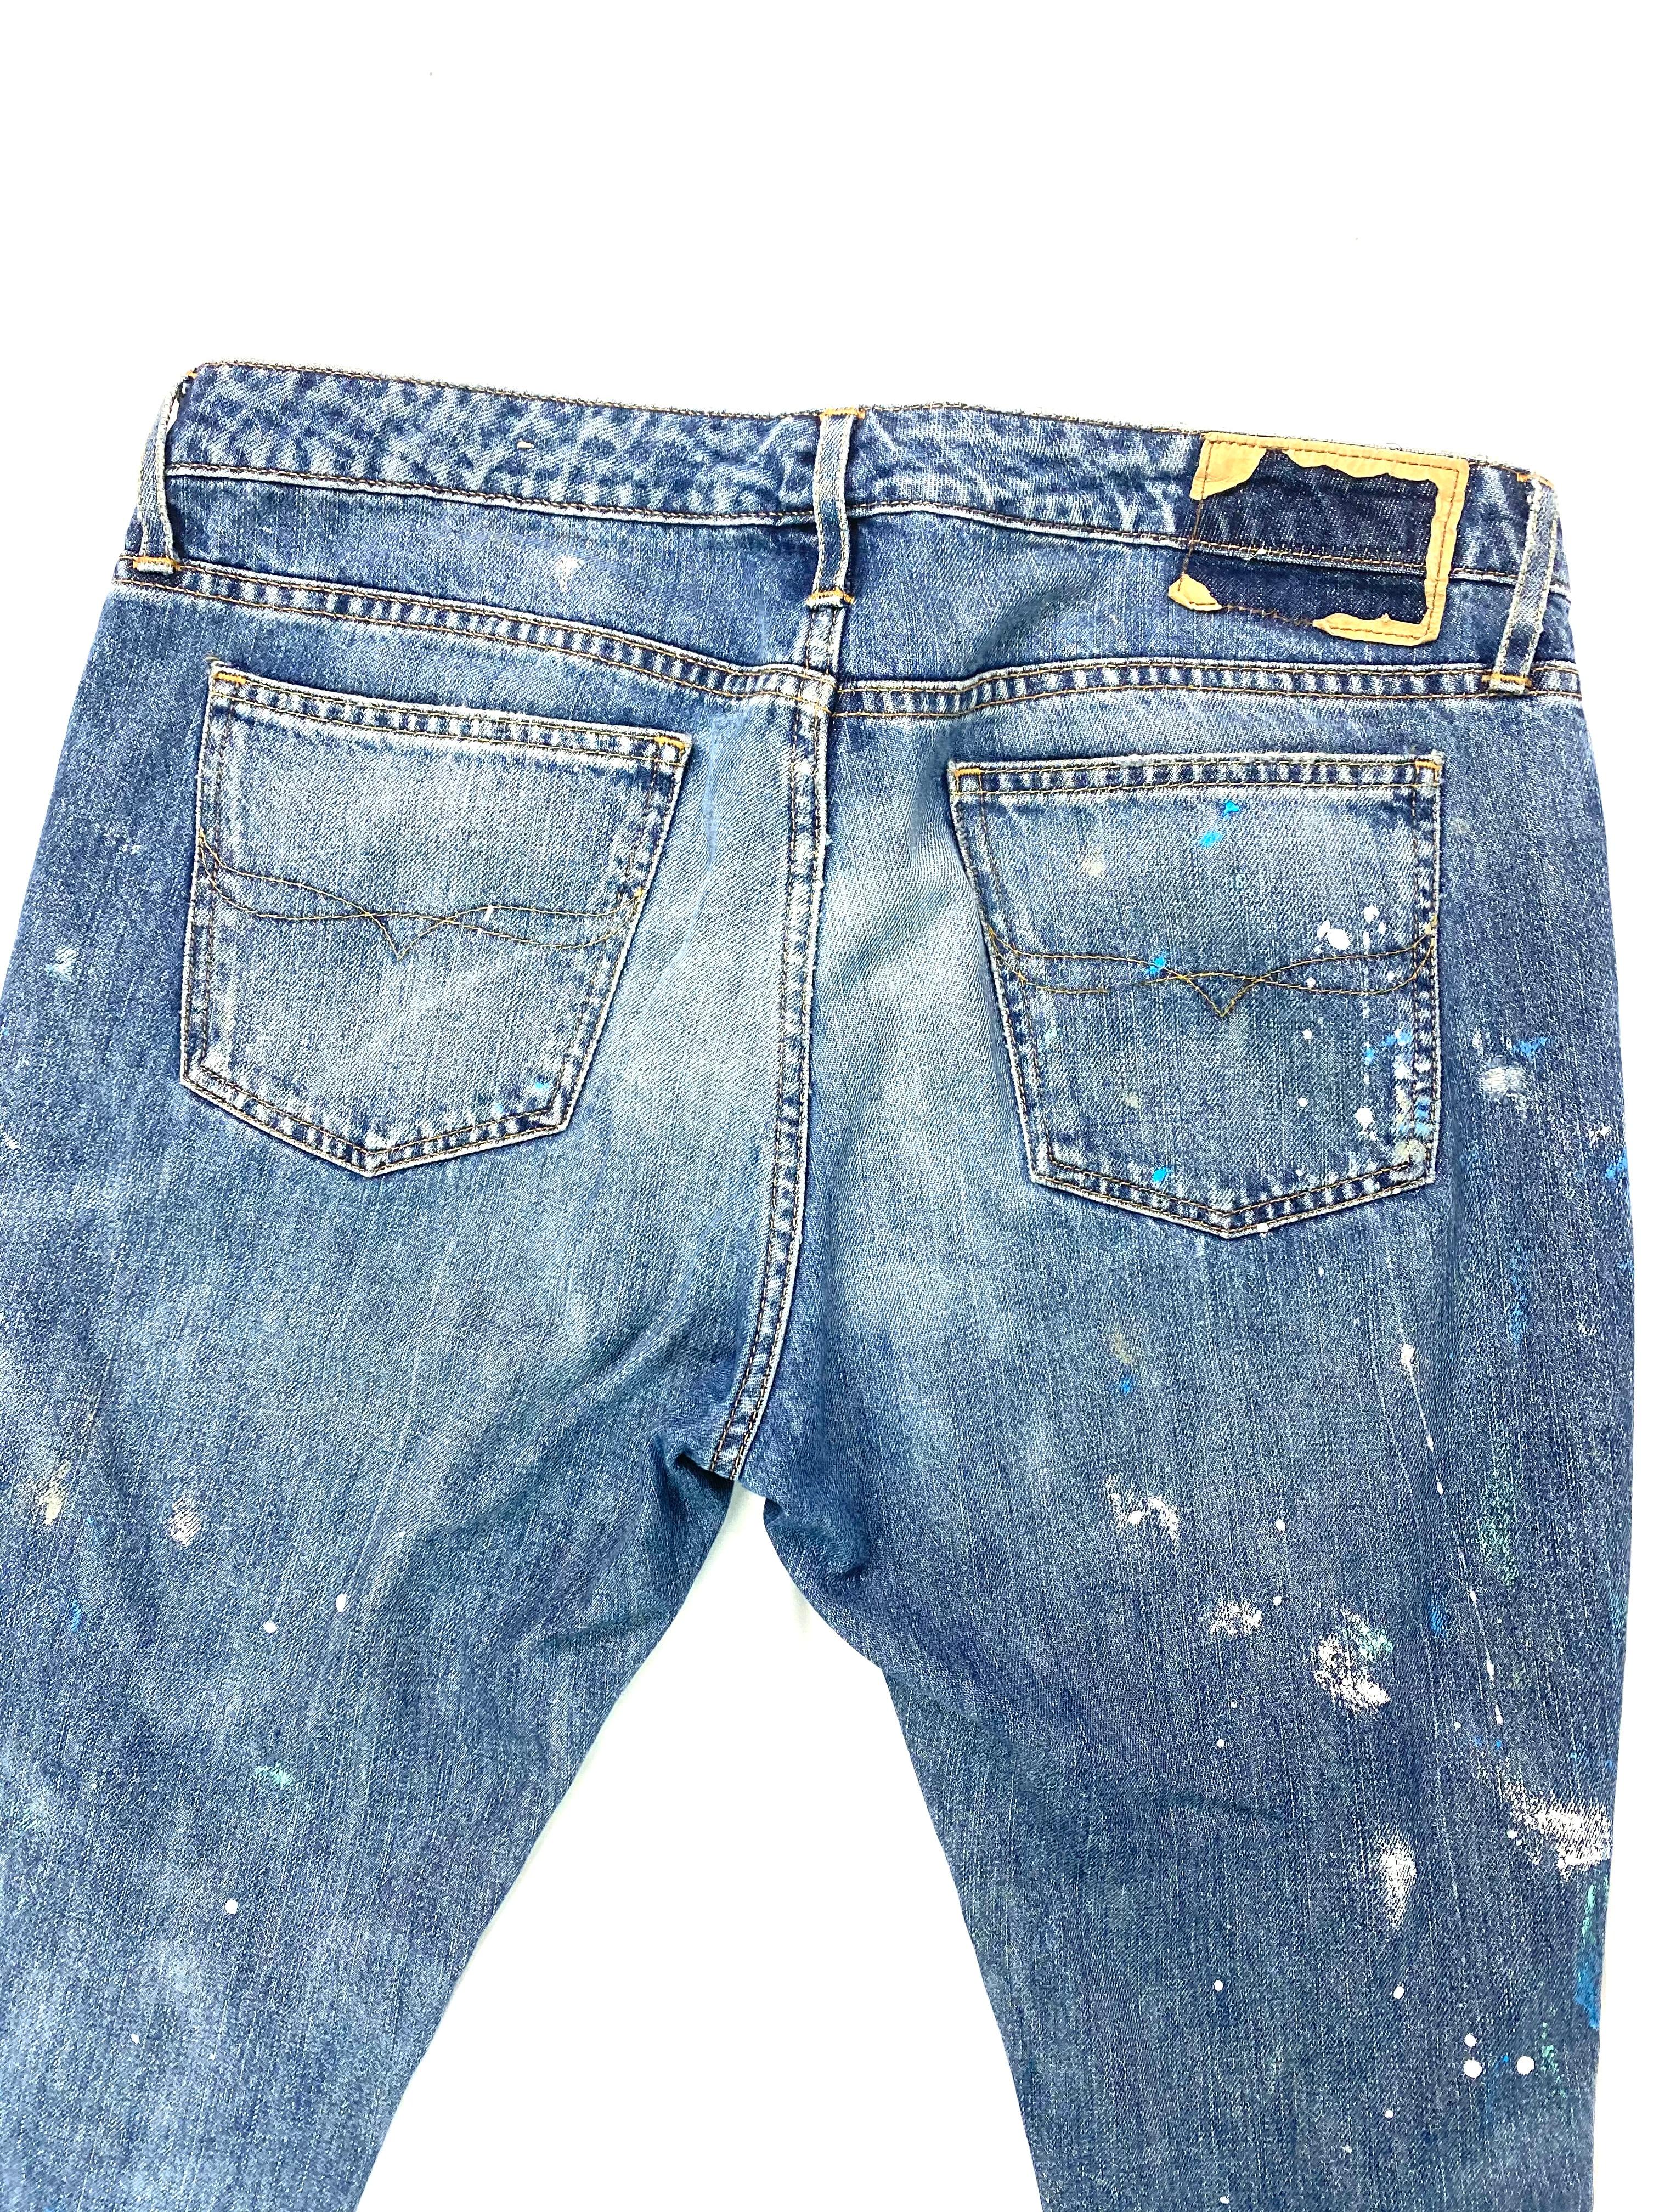 Polo Ralph Lauren Astor Slim Boyfriend Denim Jeans, Size 29 For Sale 1